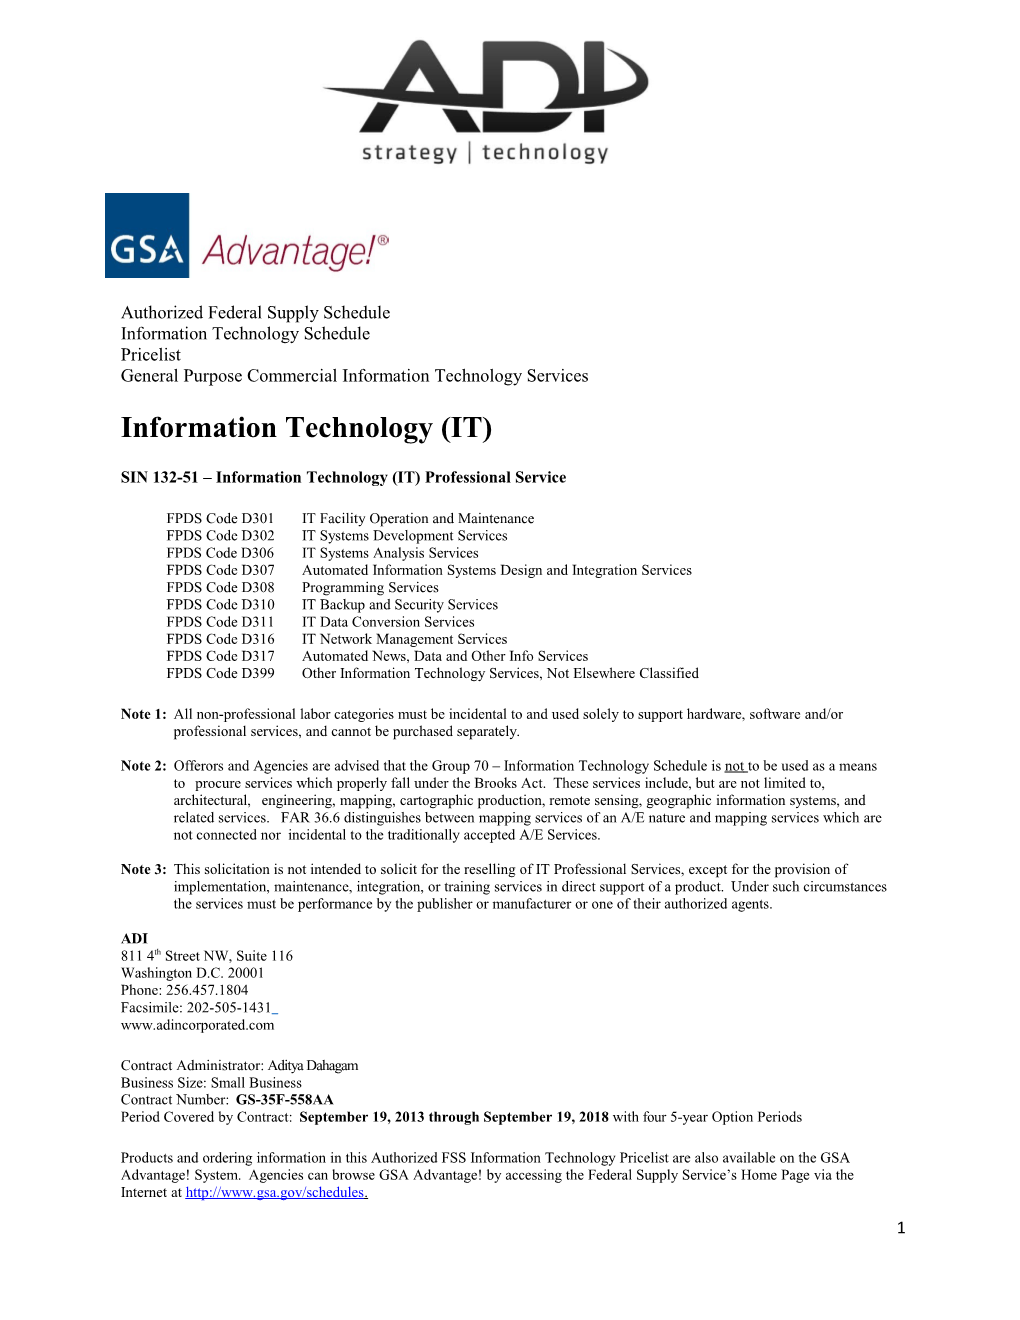 SIN 132-51 Informationtechnology(IT)Professionalservice